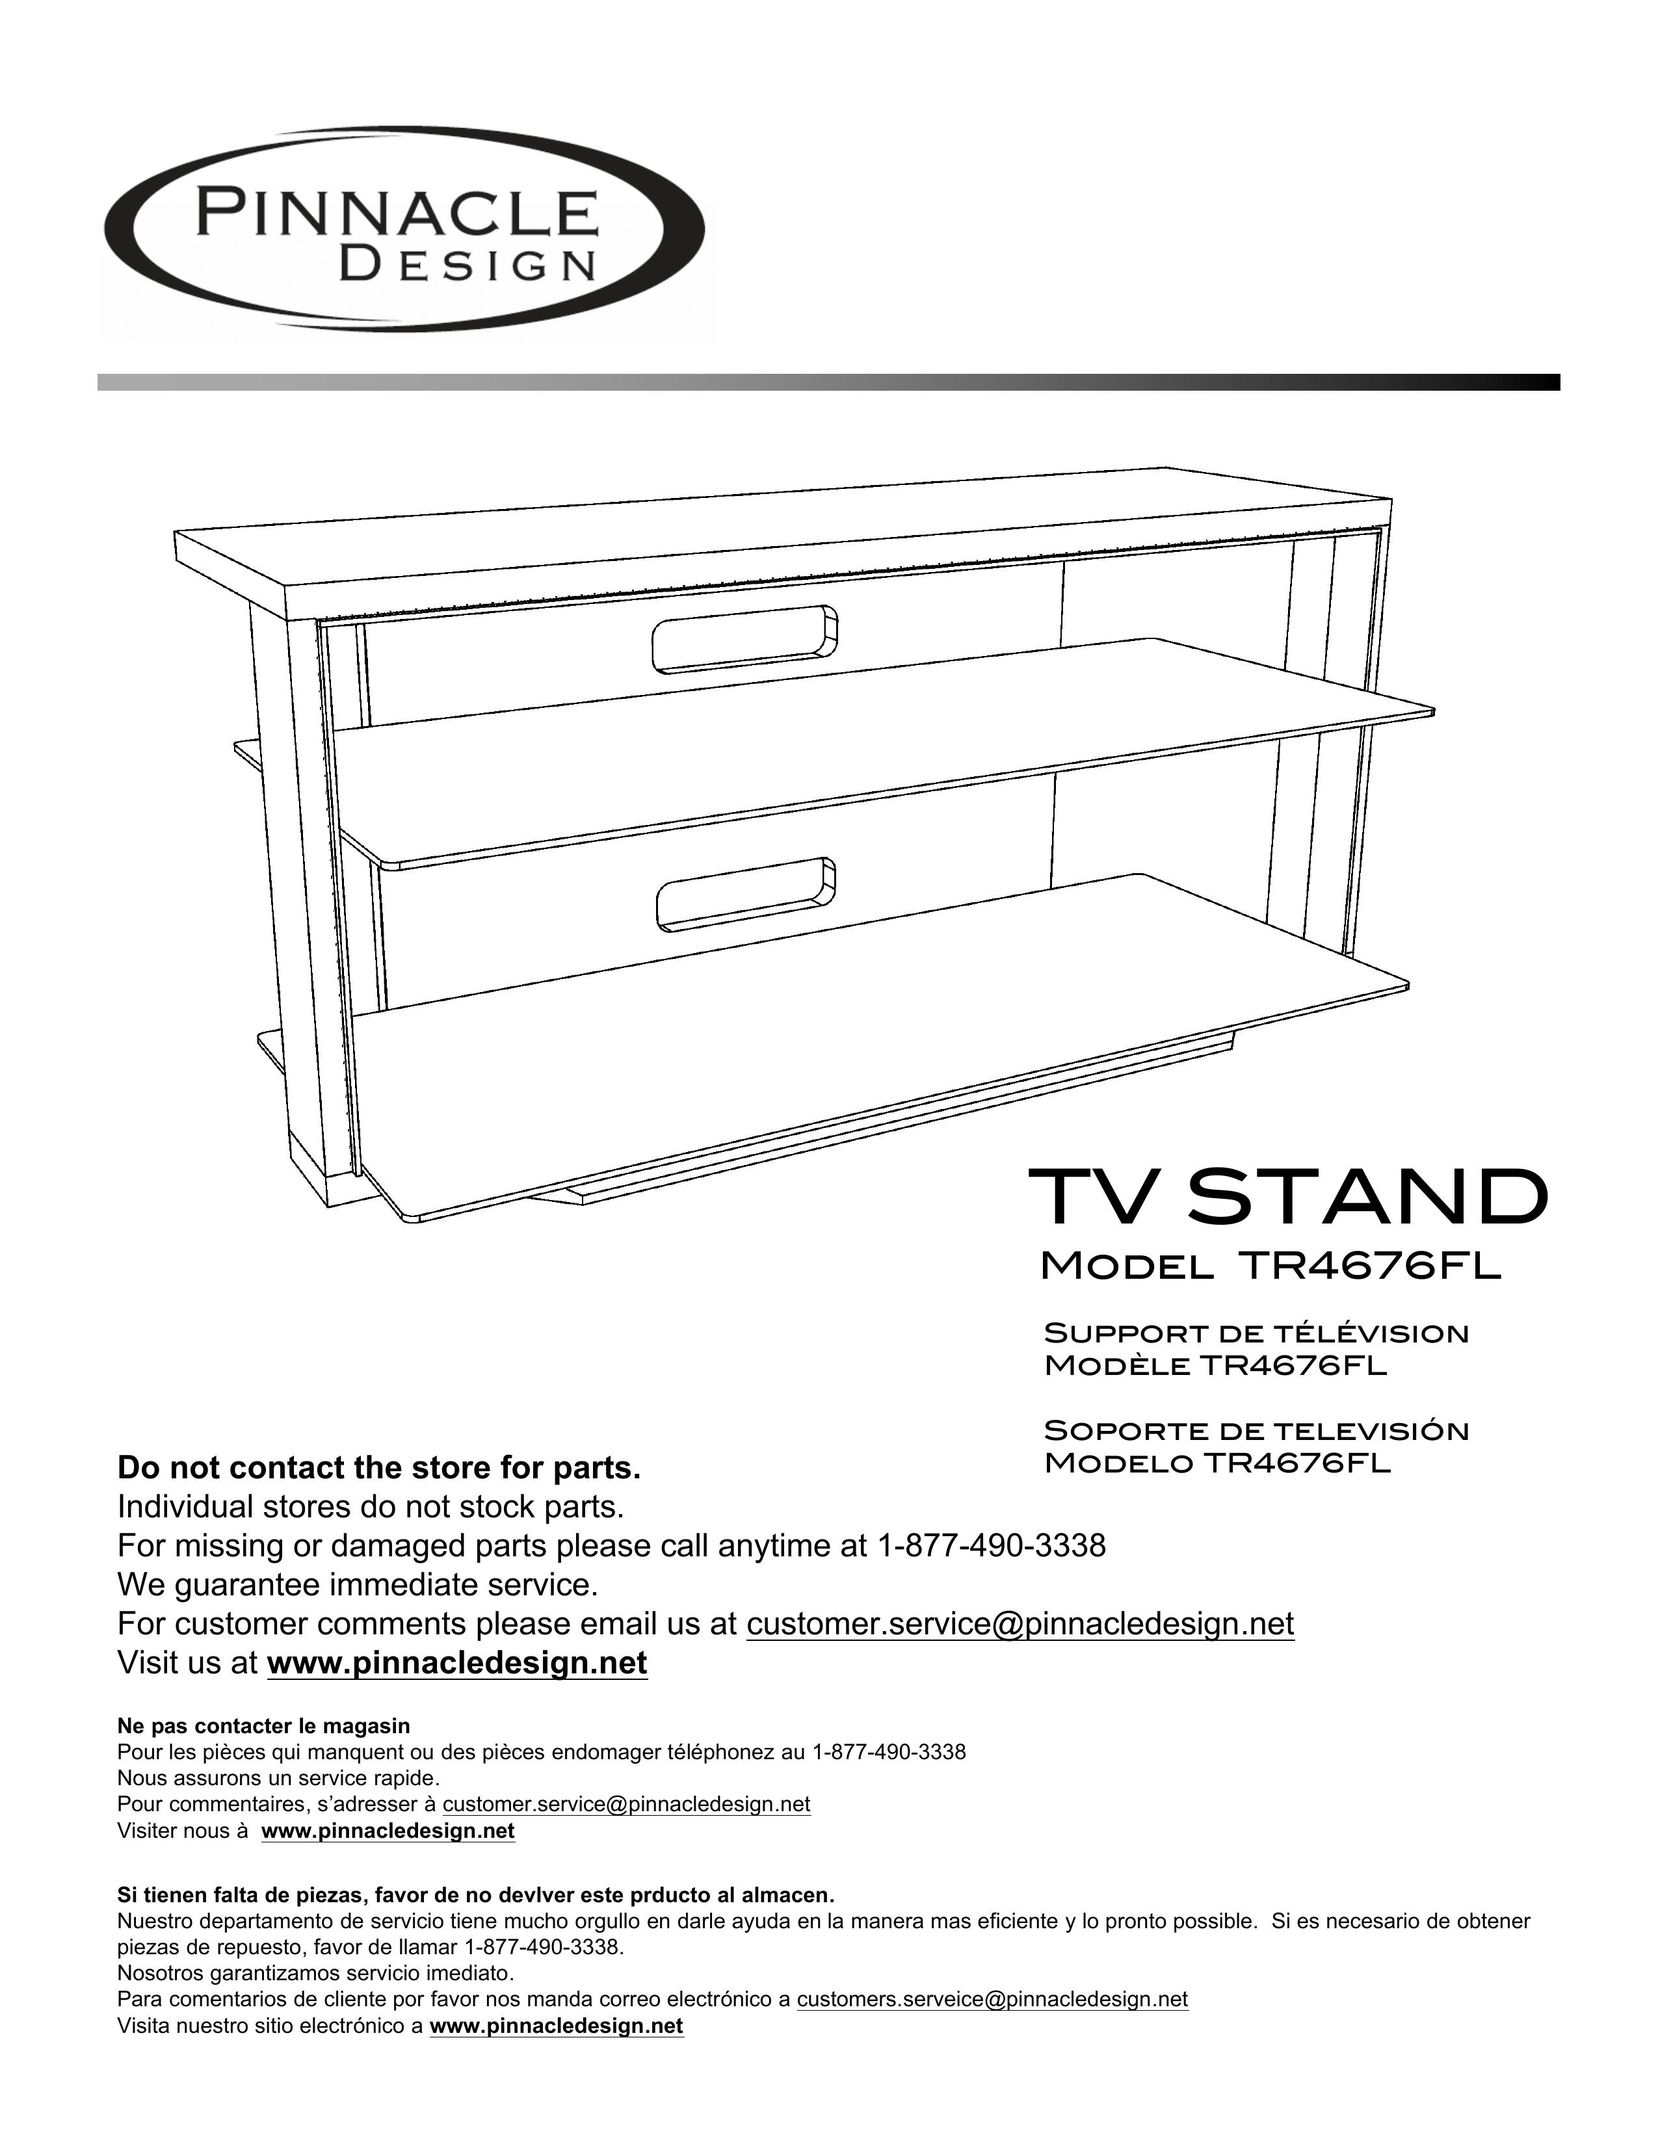 Pinnacle Design TR4676FL TV Video Accessories User Manual